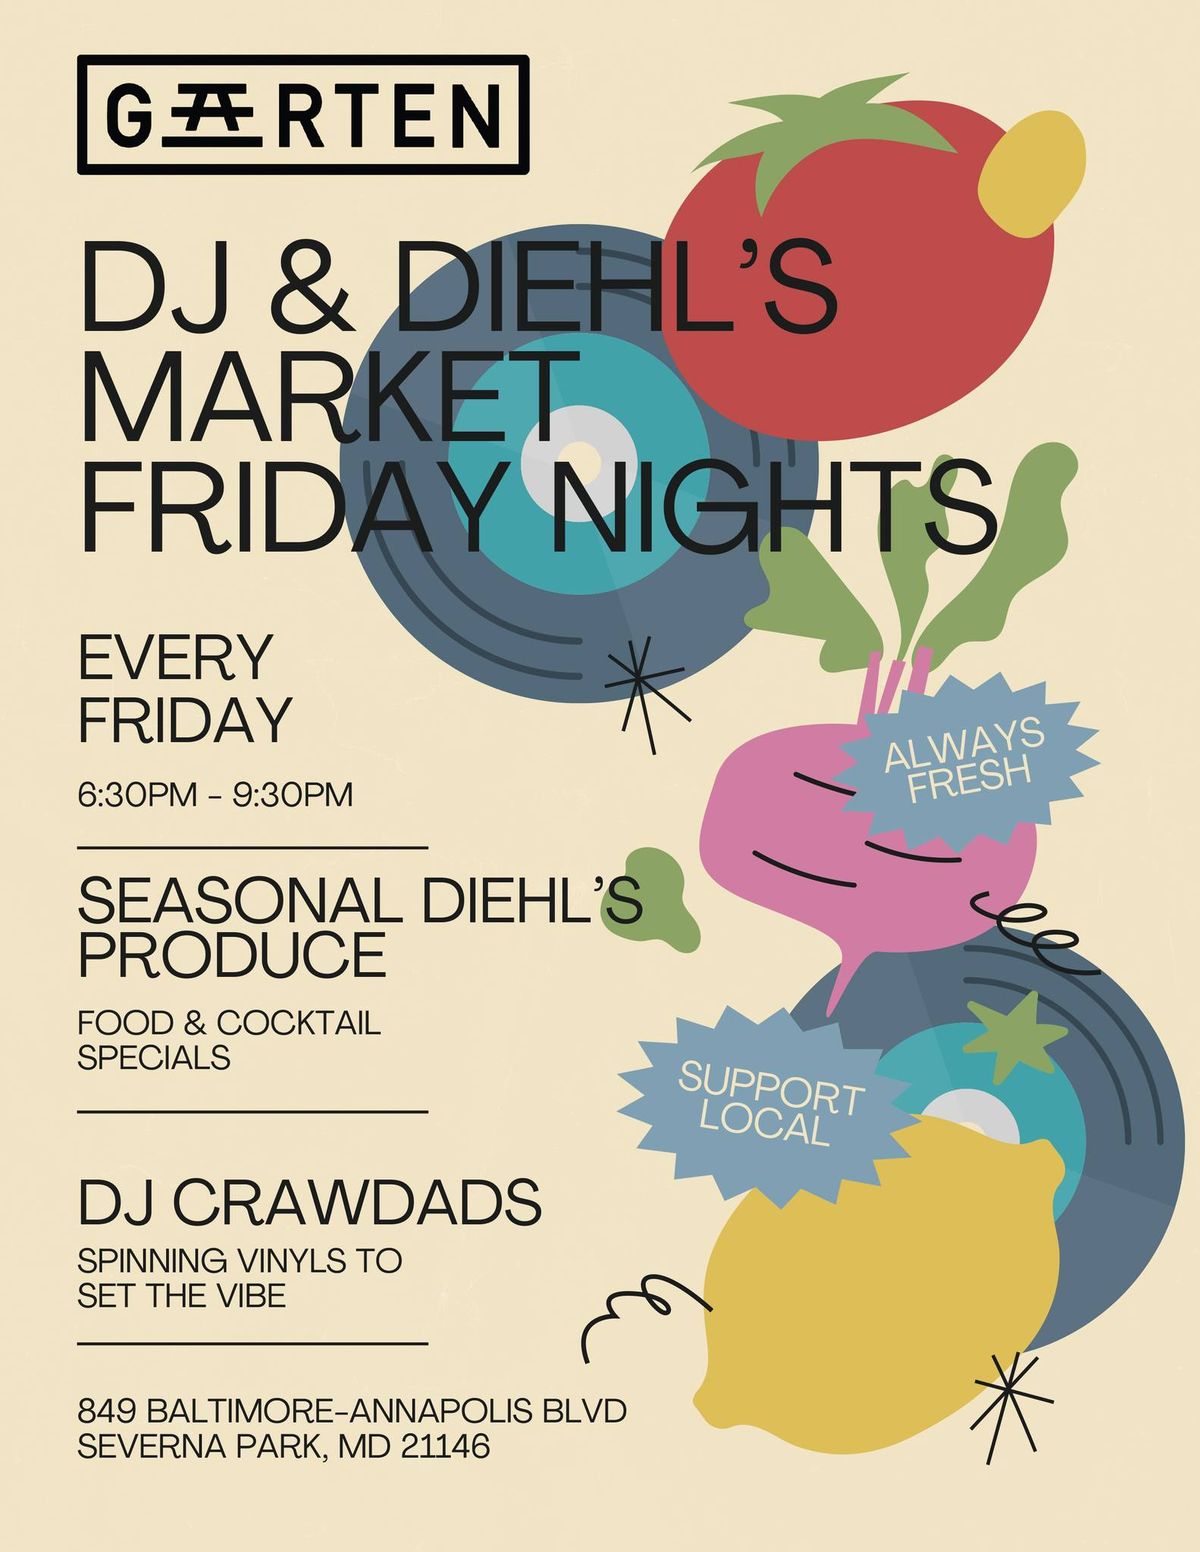 A flyer for DJ & Diehl's Market at Garten every Friday night this summer.